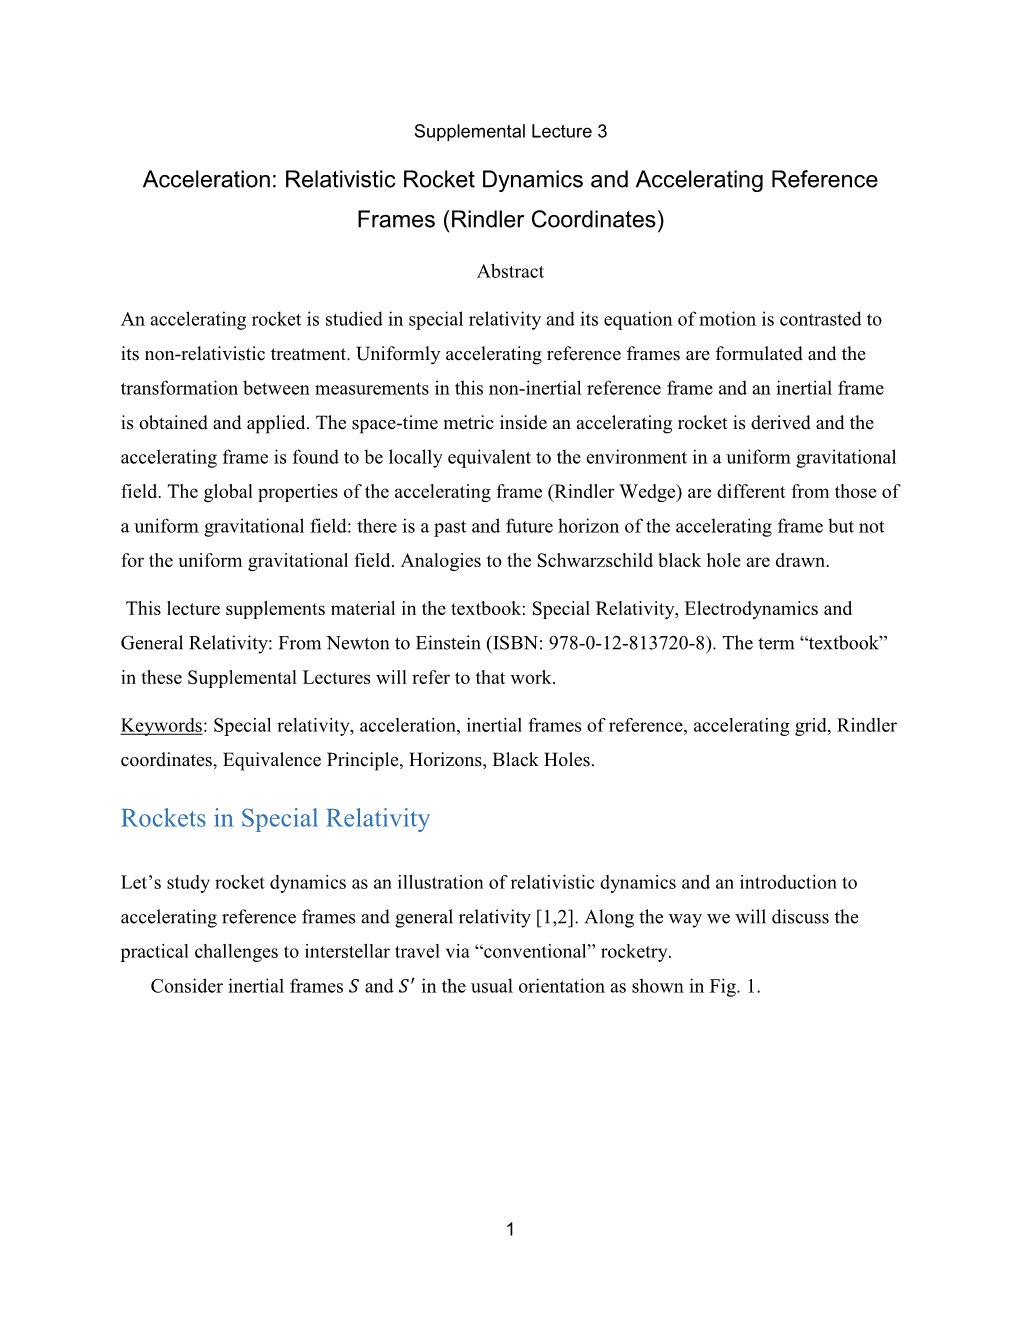 Relativistic Rocket Dynamics and Accelerating Reference Frames (Rindler Coordinates)